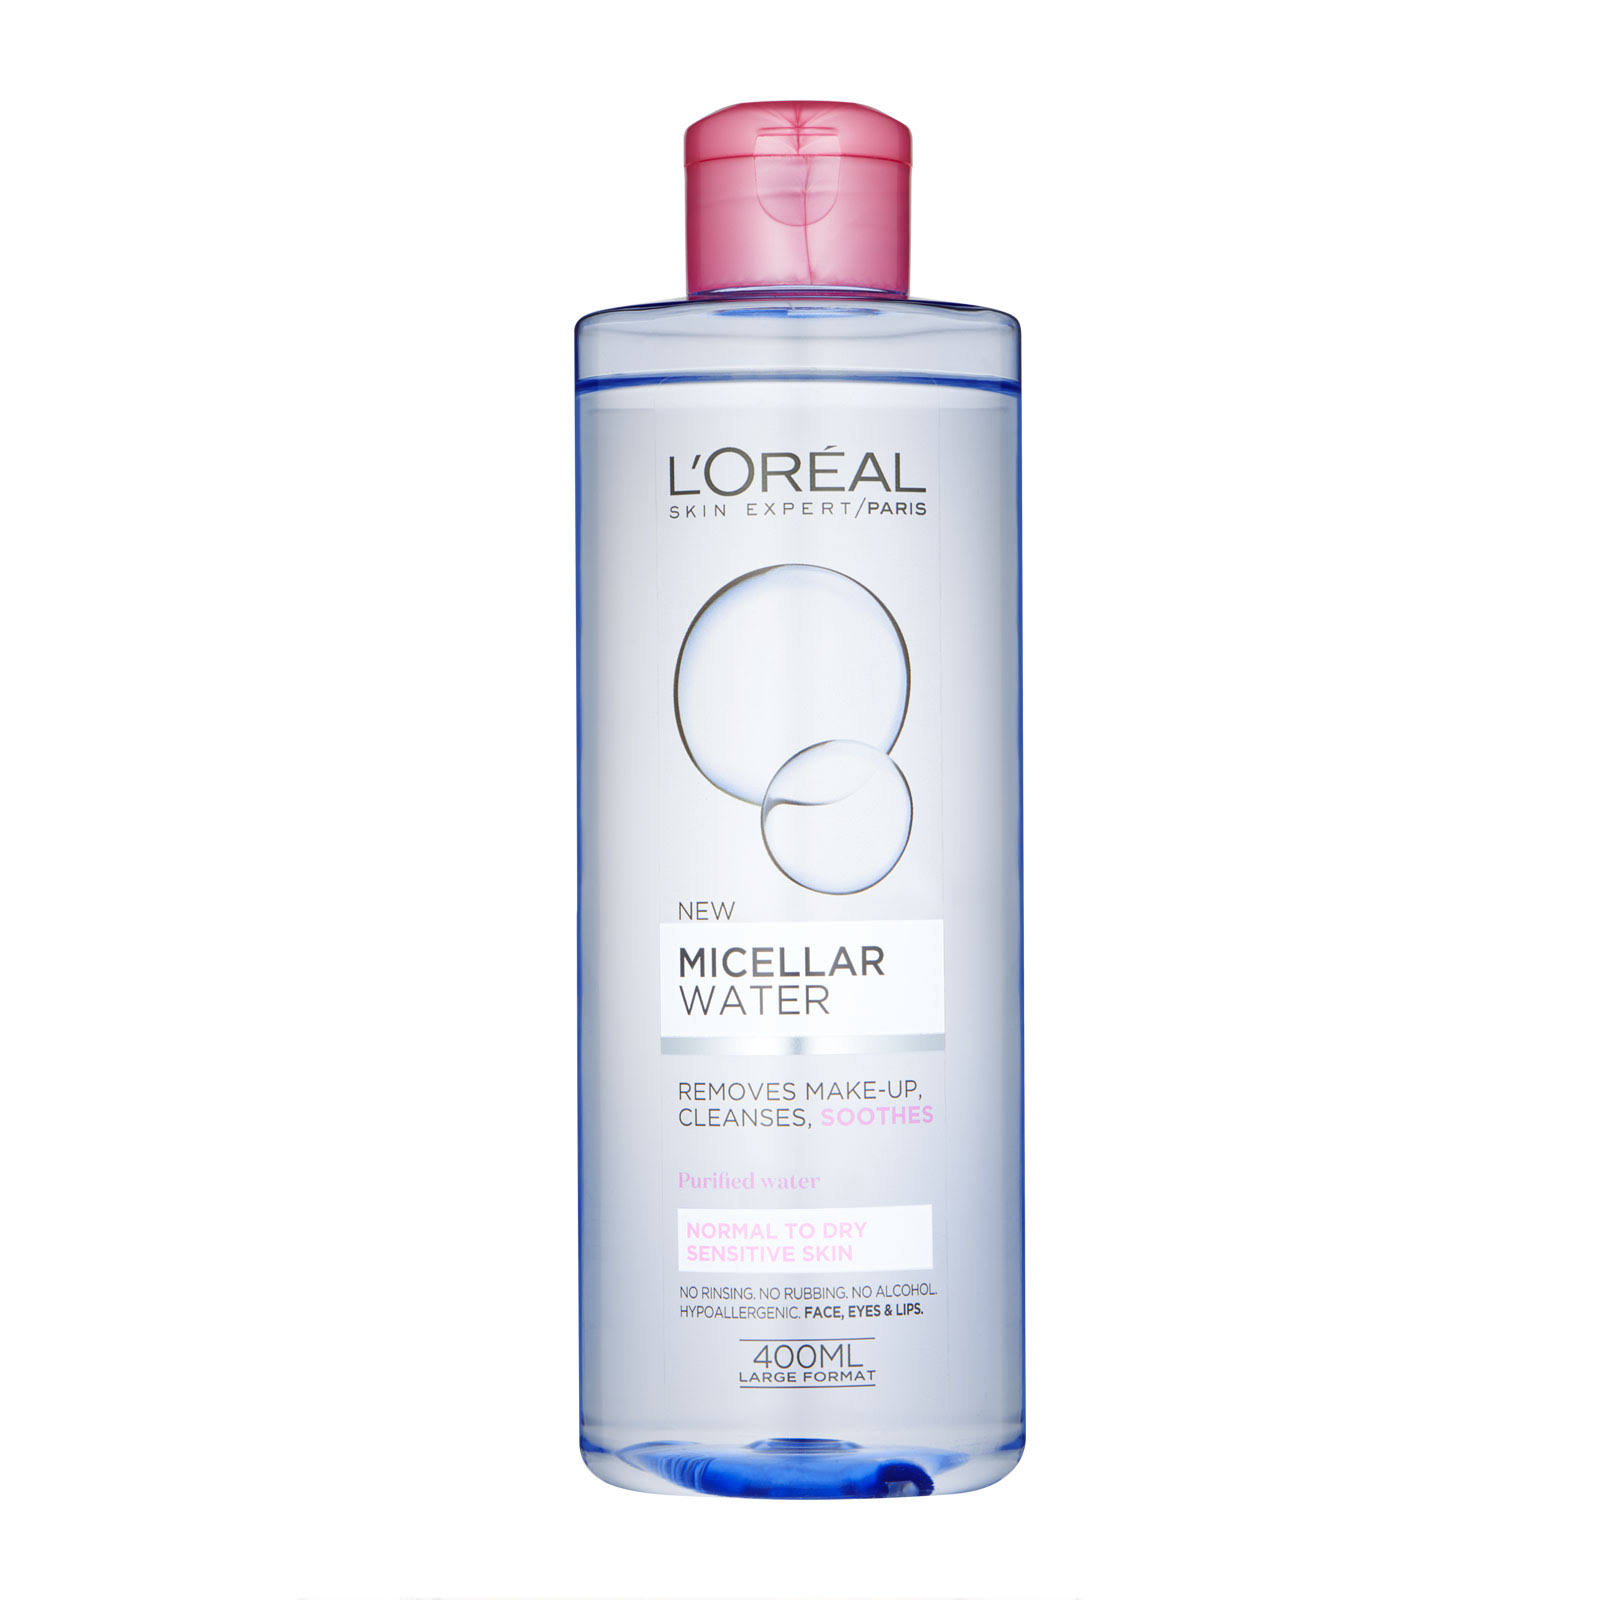 L'Oreal Paris Skin Expert Micellar Water - Normal to Dry Skin, 400ml